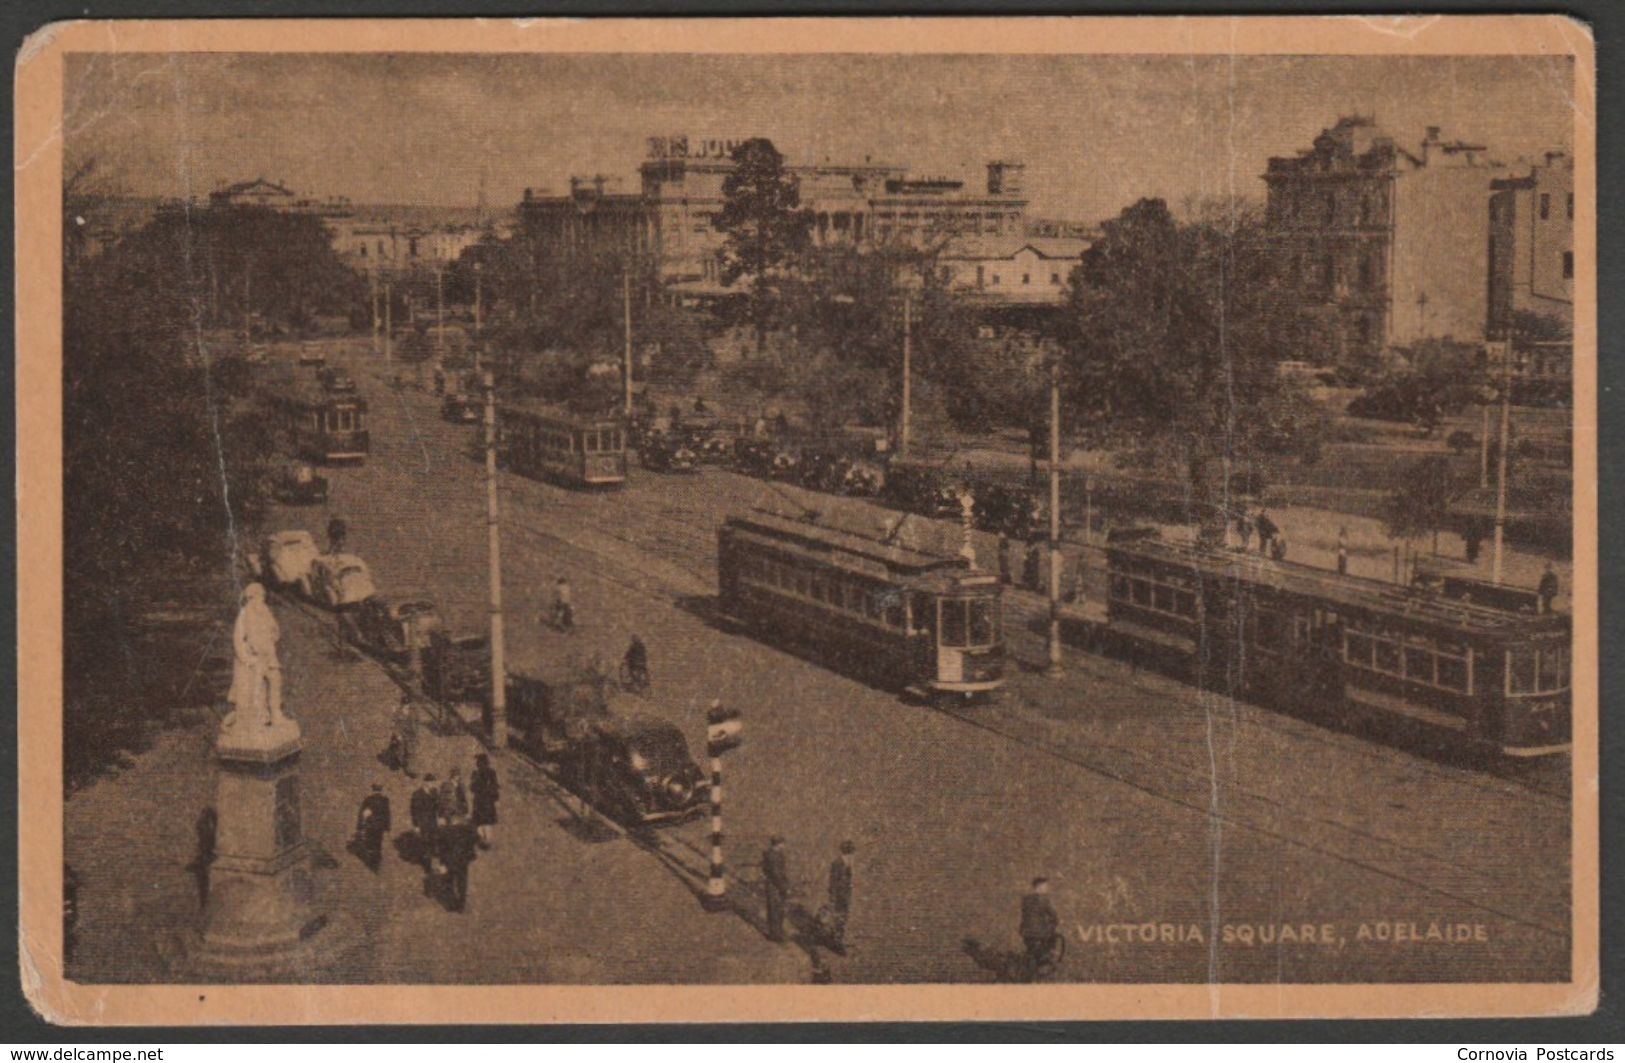 Victoria Square, Adelaide, Australia, C1940 - J.S. Postcard - Adelaide